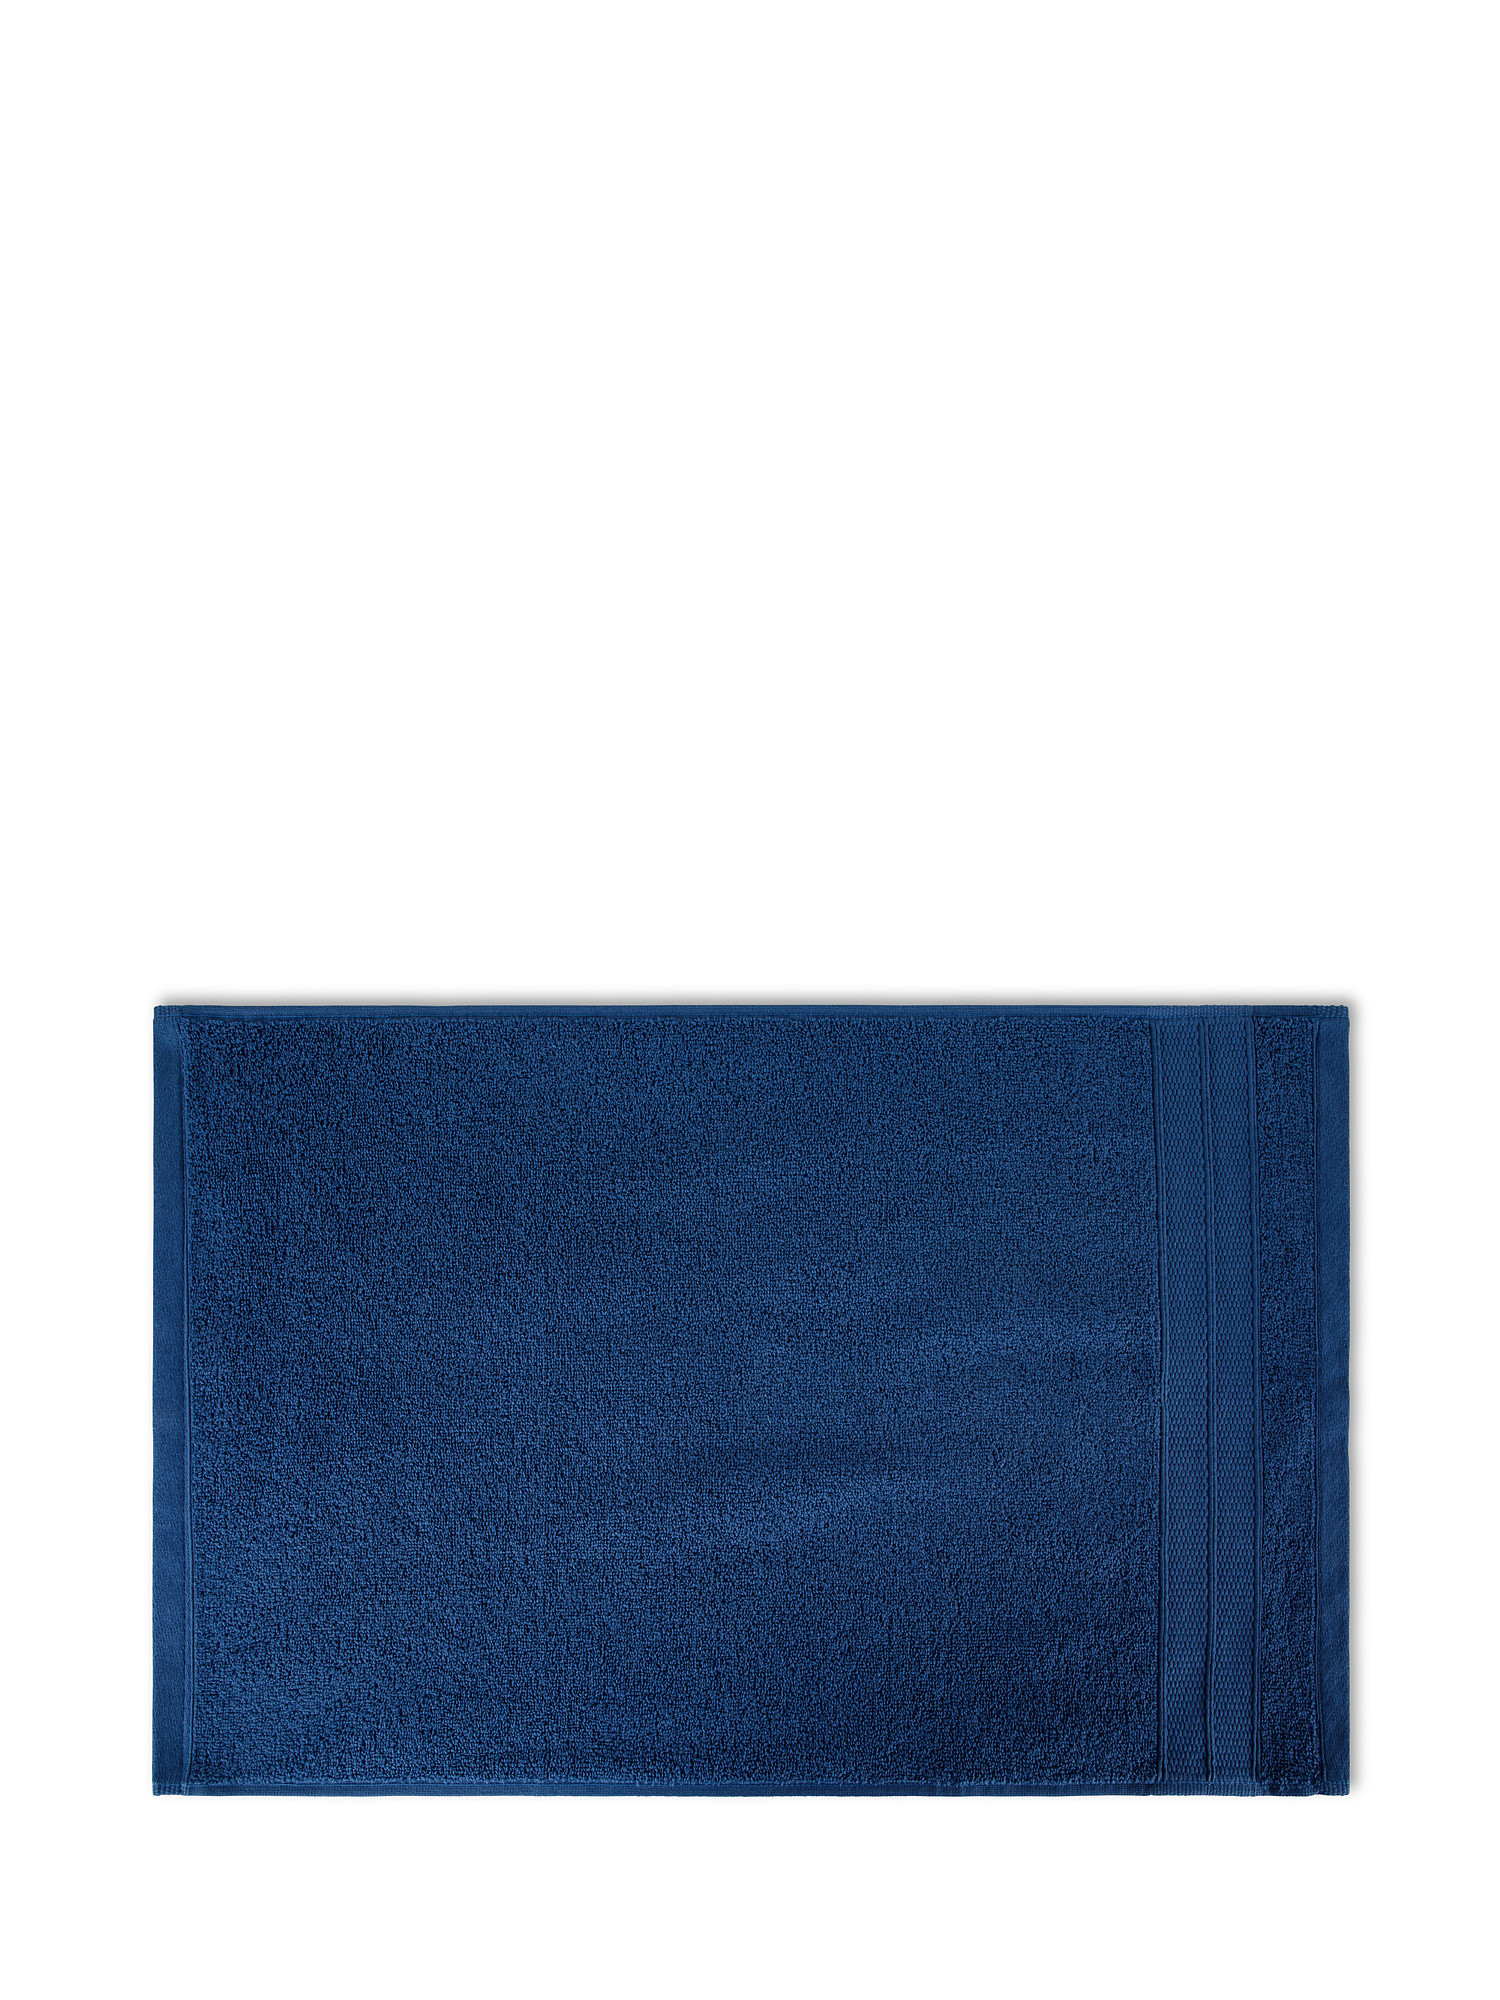 Asciugamano spugna di cotone tinta unita, Blu, large image number 1